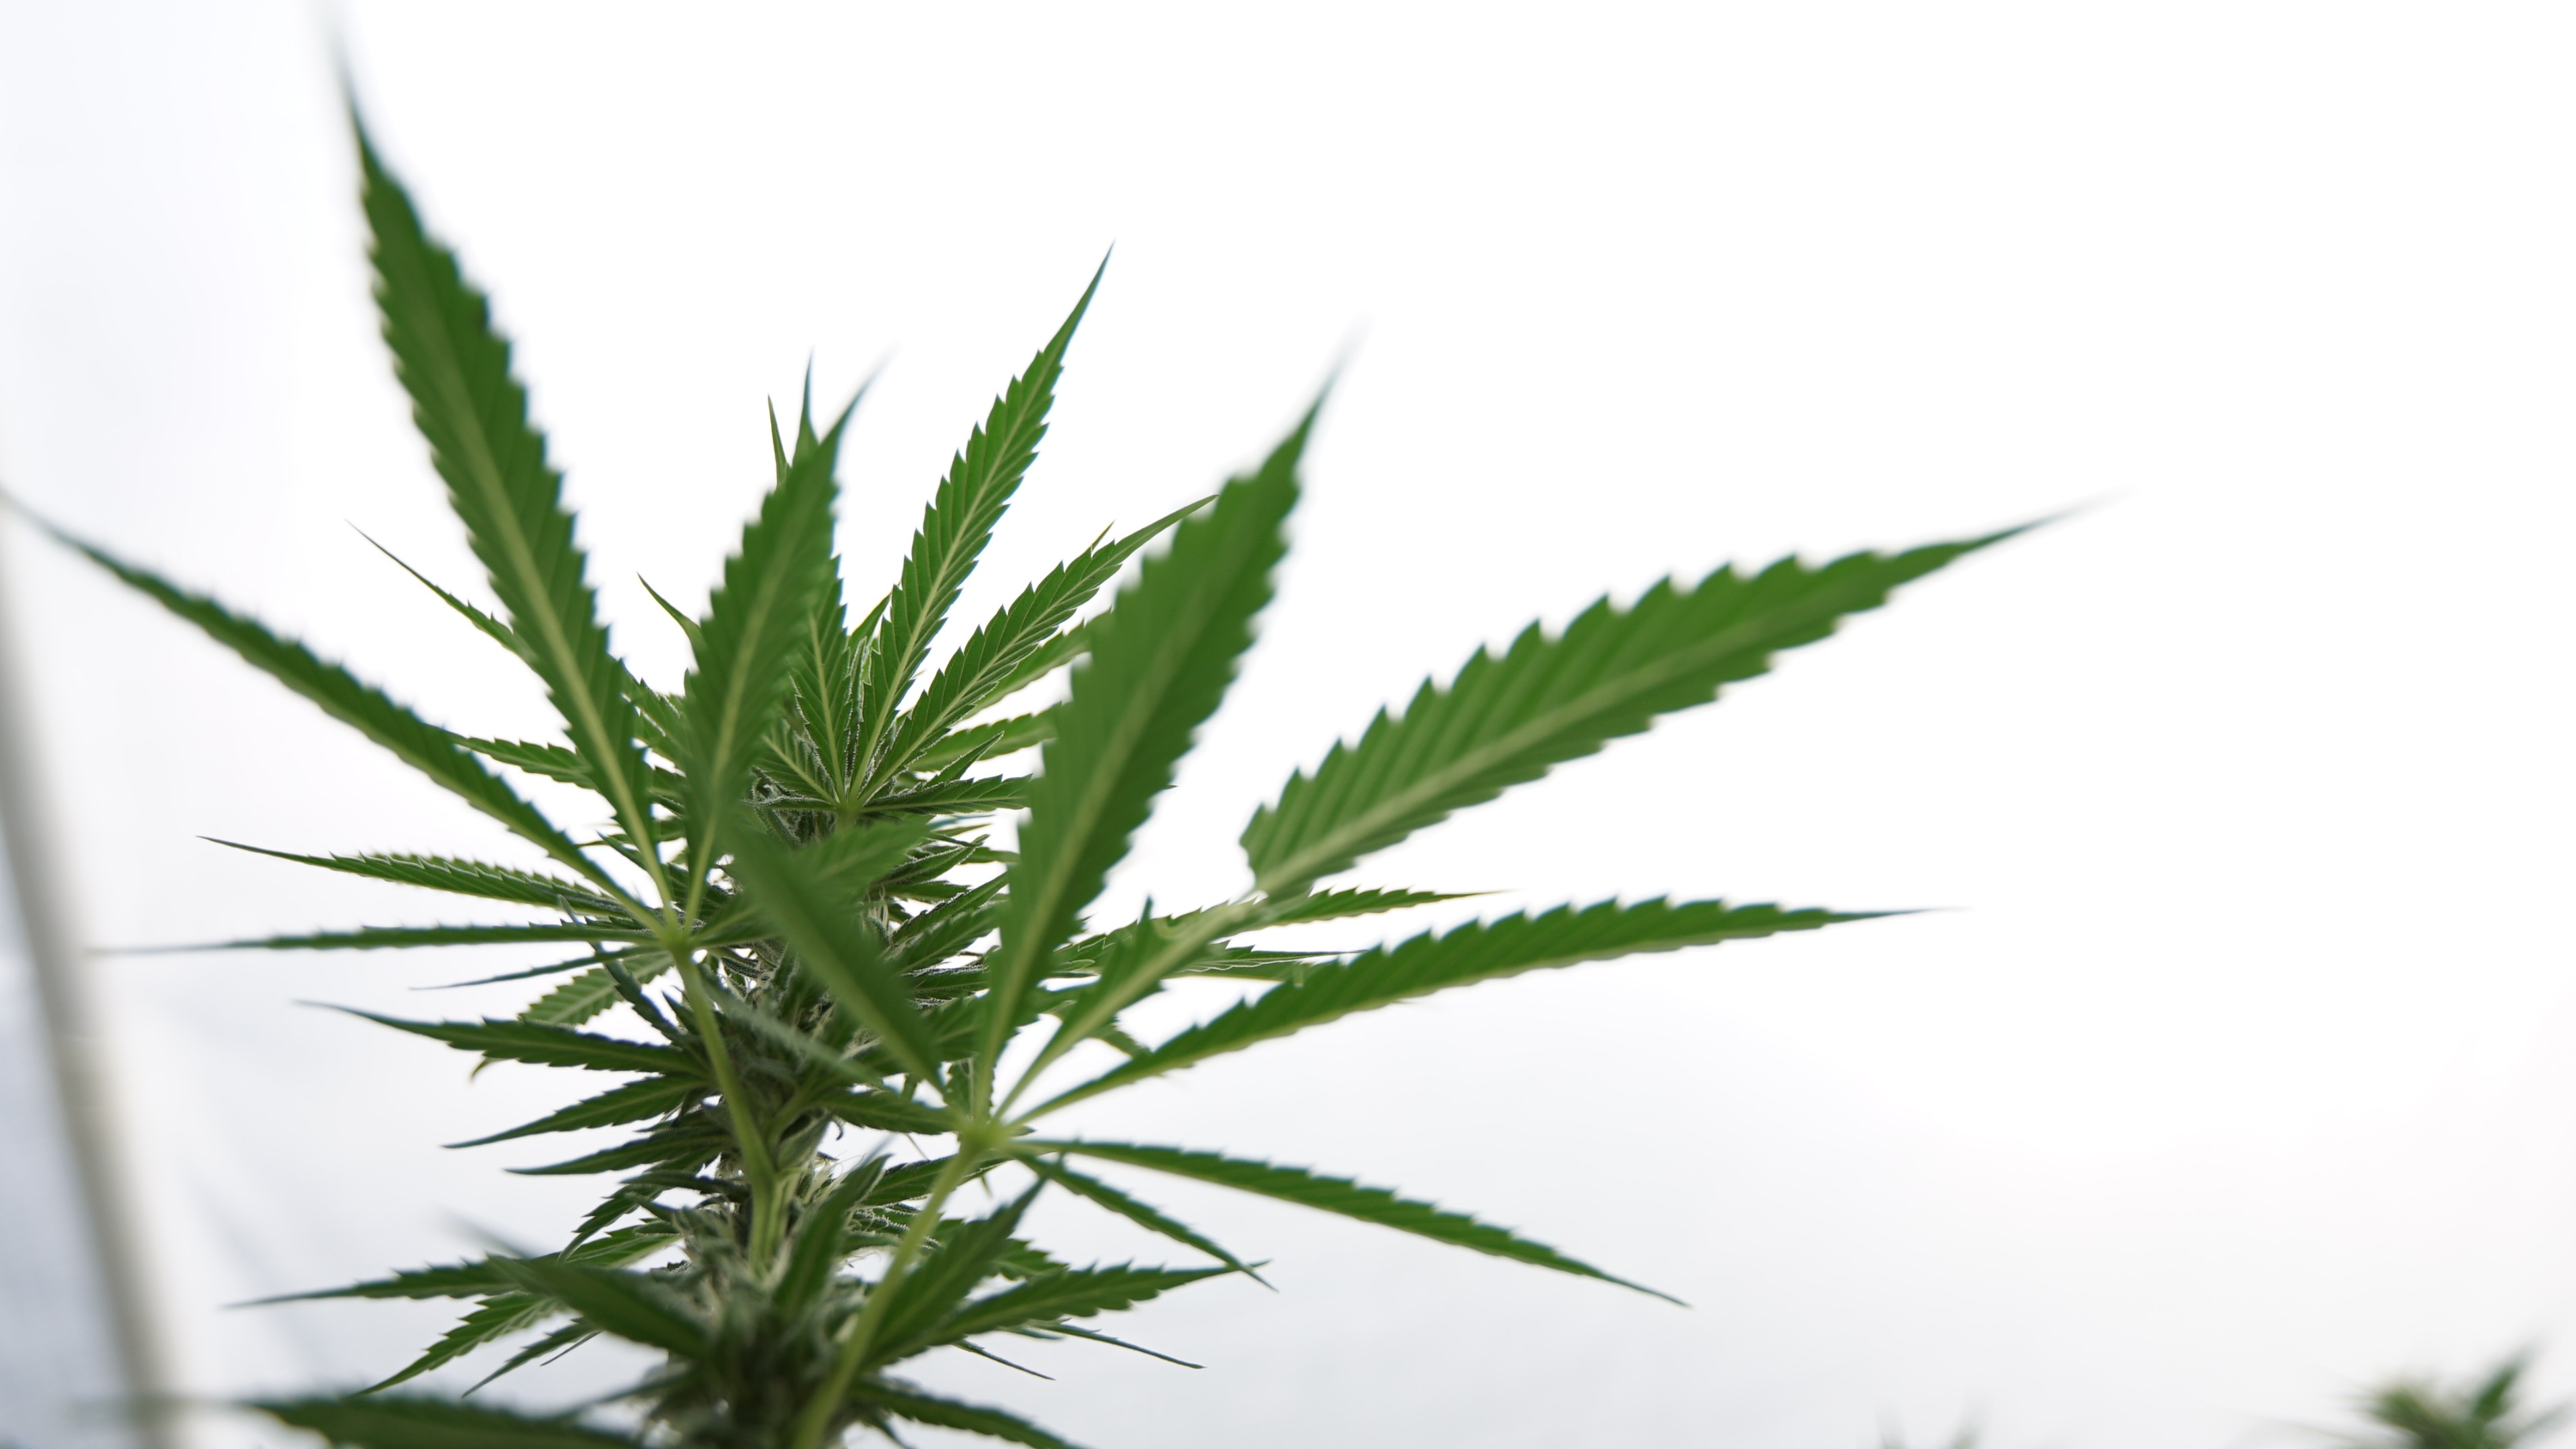 Pennsylvania Lawmaker Files Bill To Expand Medical Marijuana Growers, Prioritizing Small Farmers